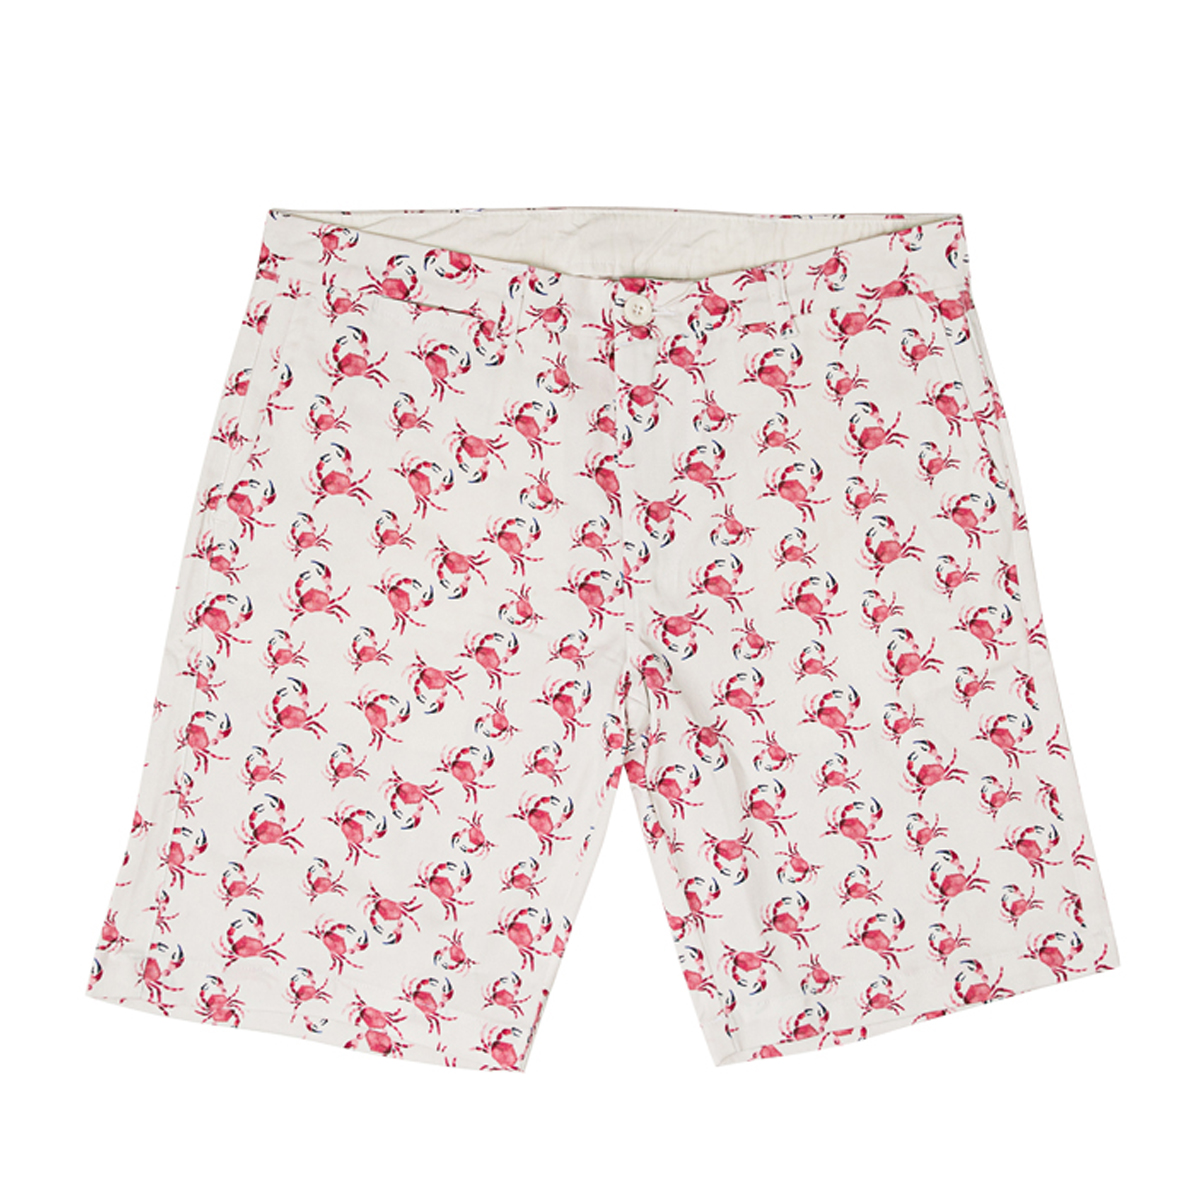 AnemosS Crab Patterned Men's Shorts S, Men Cloth, Beachwear, Shorts, Cotton